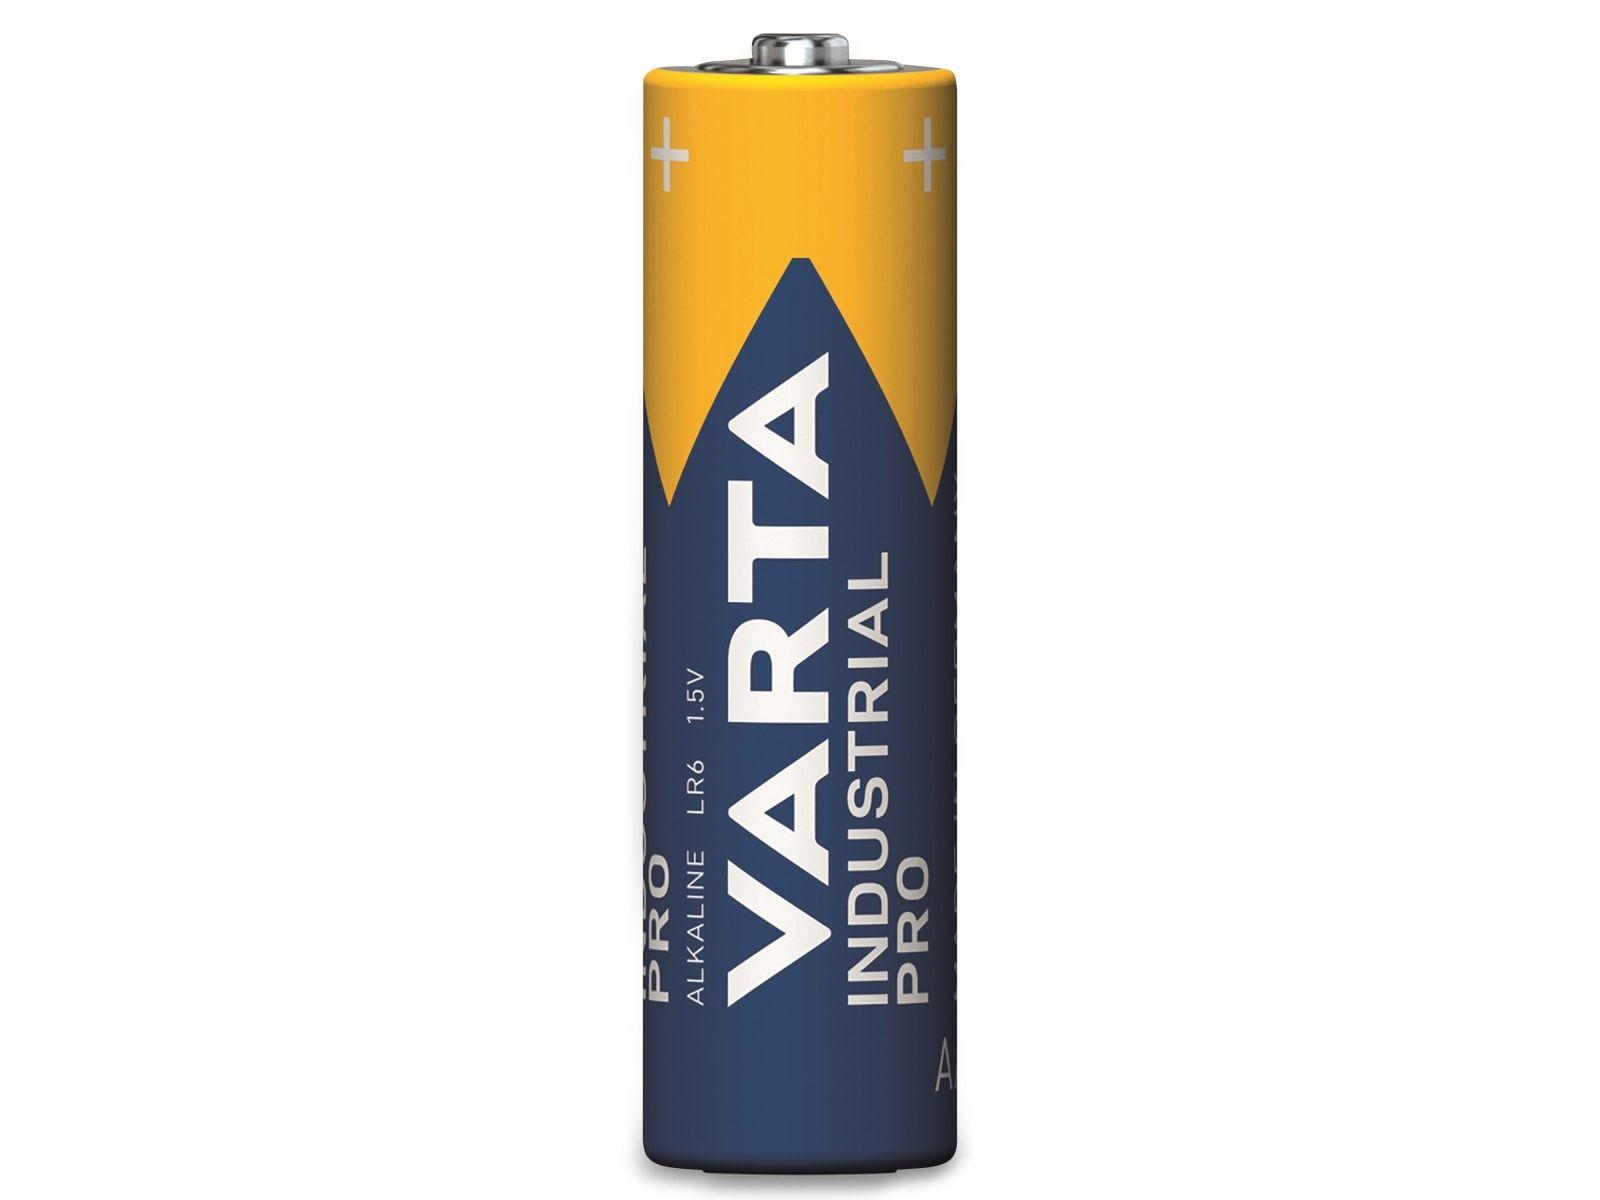 Industrial 4006 Folie) Volt, AA AlMn, Batterie VARTA Pro Batterie, 2.97 Mignon 1.5 AlMn Ah (4er